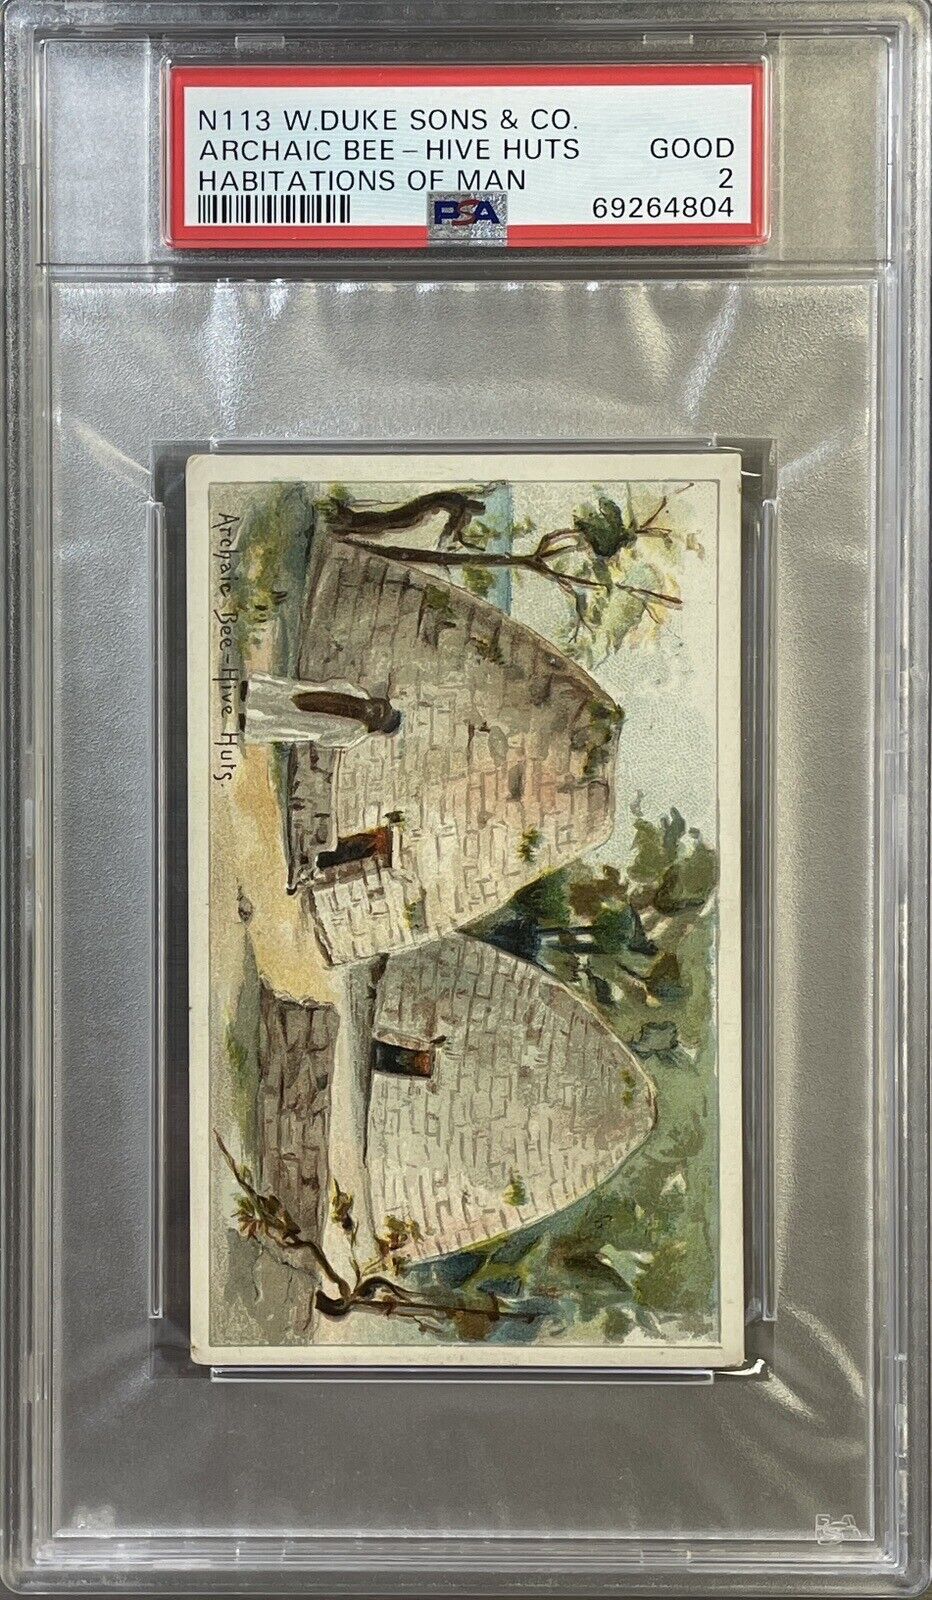 1890 N113 W. Duke & Sons Habitations Of Man ARCHAIC BEE - HIVE HUTS PSA 2 GOOD